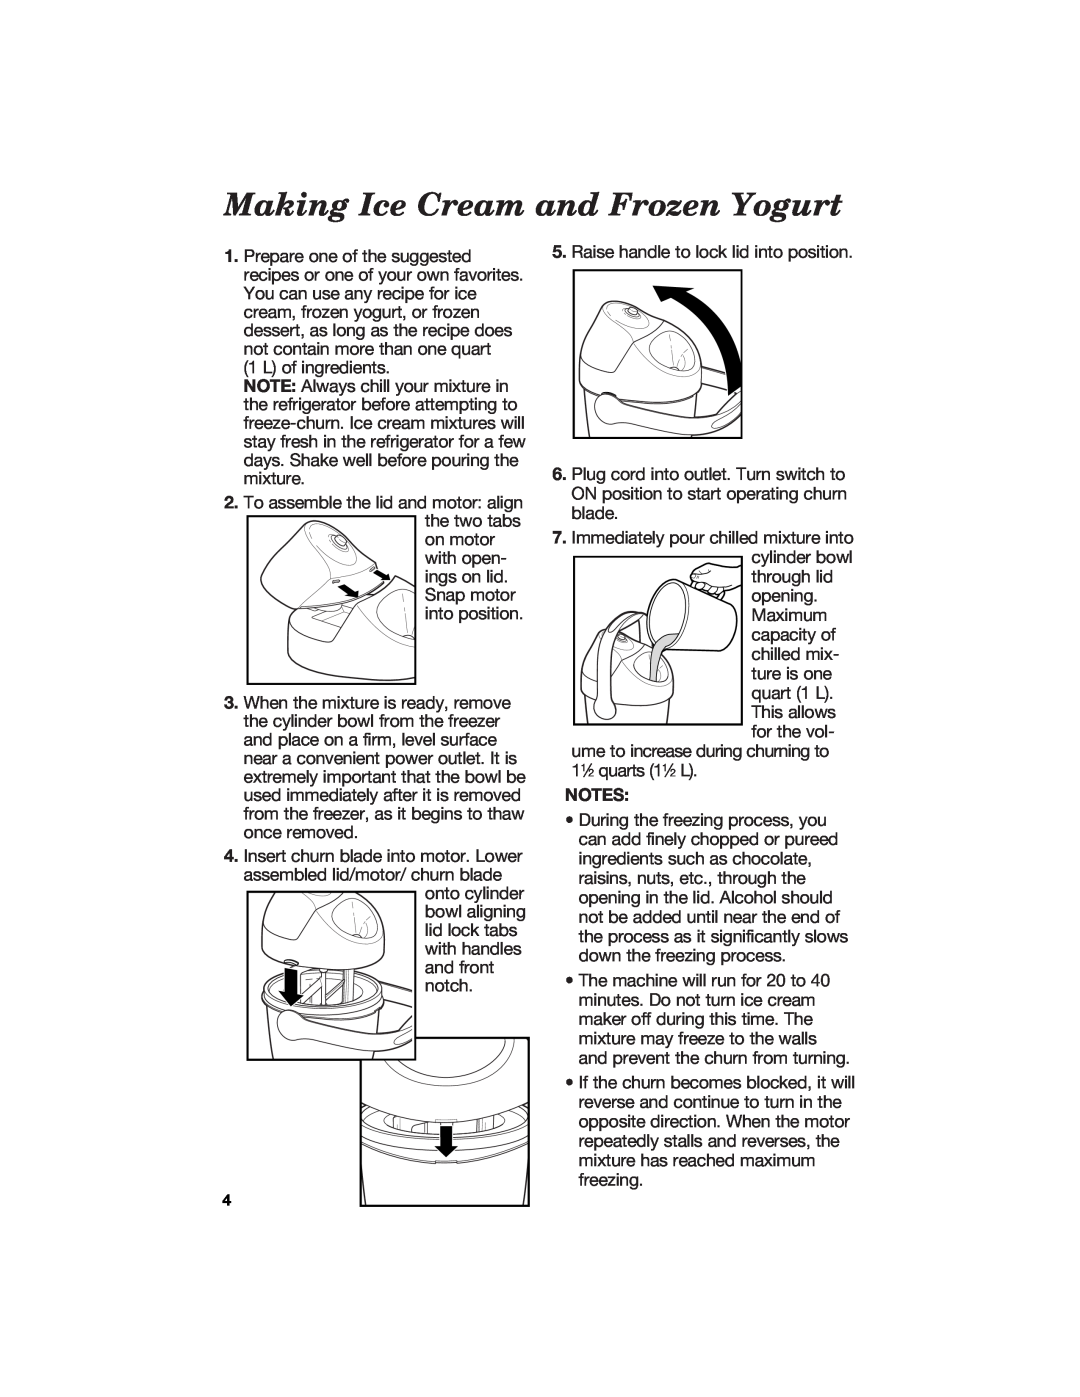 Hamilton Beach Ice Cream and Frozen Yogurt Maker manual Making Ice Cream and Frozen Yogurt 